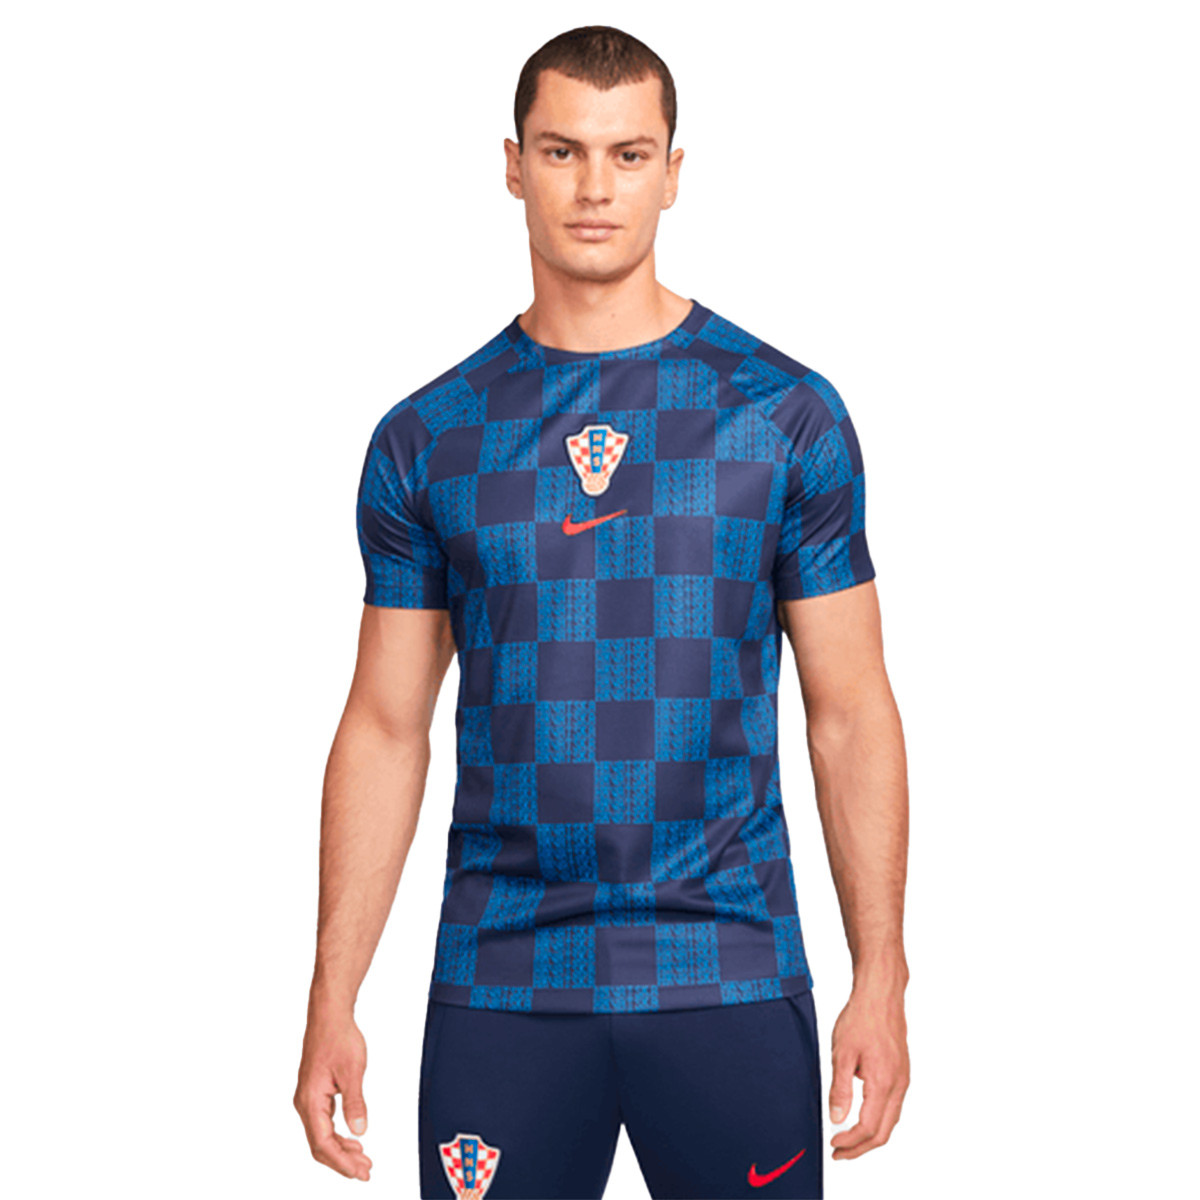 Camiseta Nike Croacia Pre-Match Mundial Qatar 2022 Blackened - Fútbol Emotion